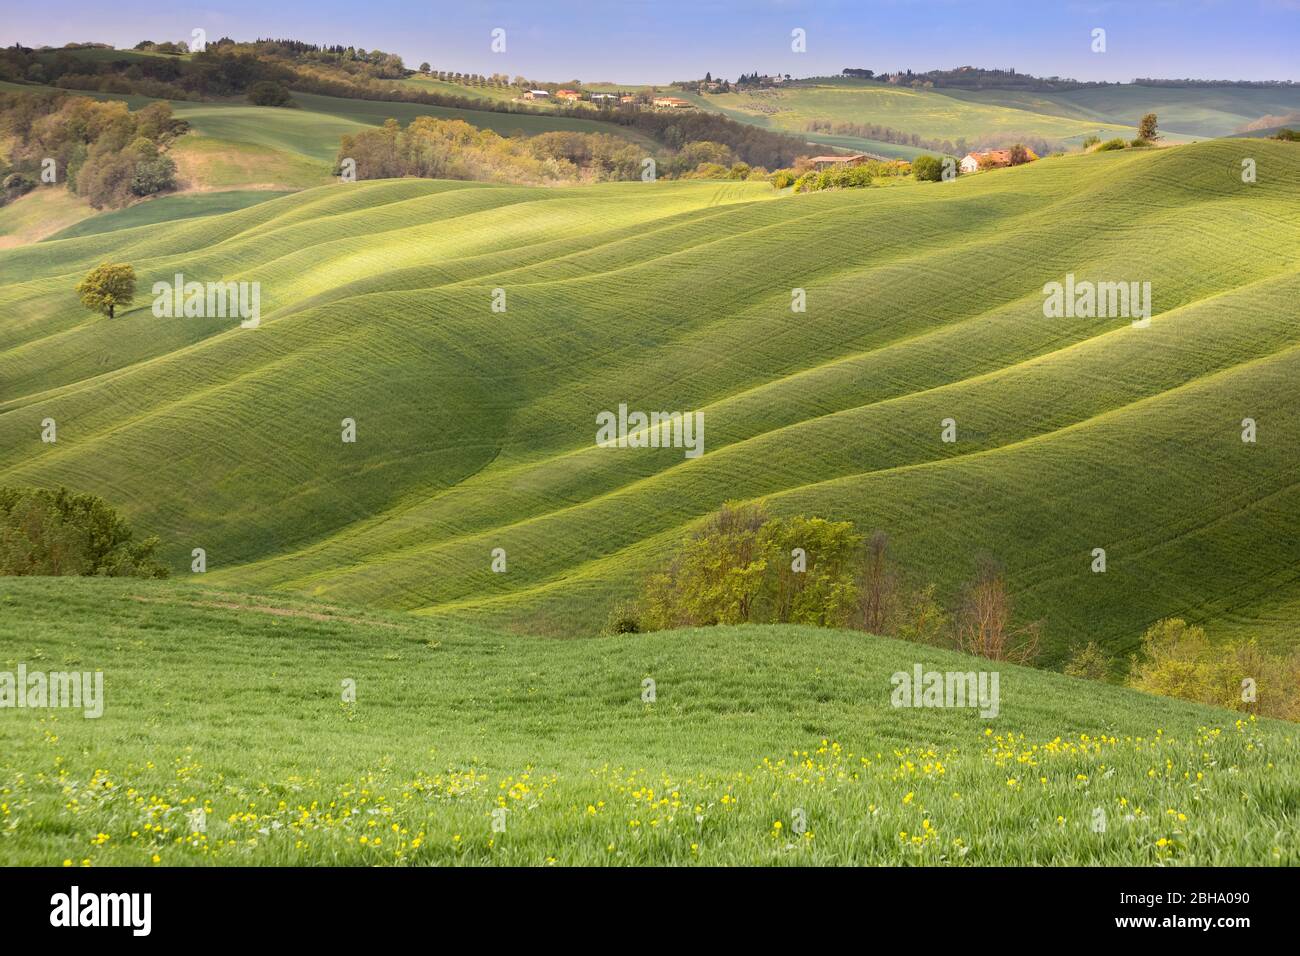 grasslands and hills, landscape of the Crete Senesi, Asciano, Siena, Tuscany, Italy Stock Photo